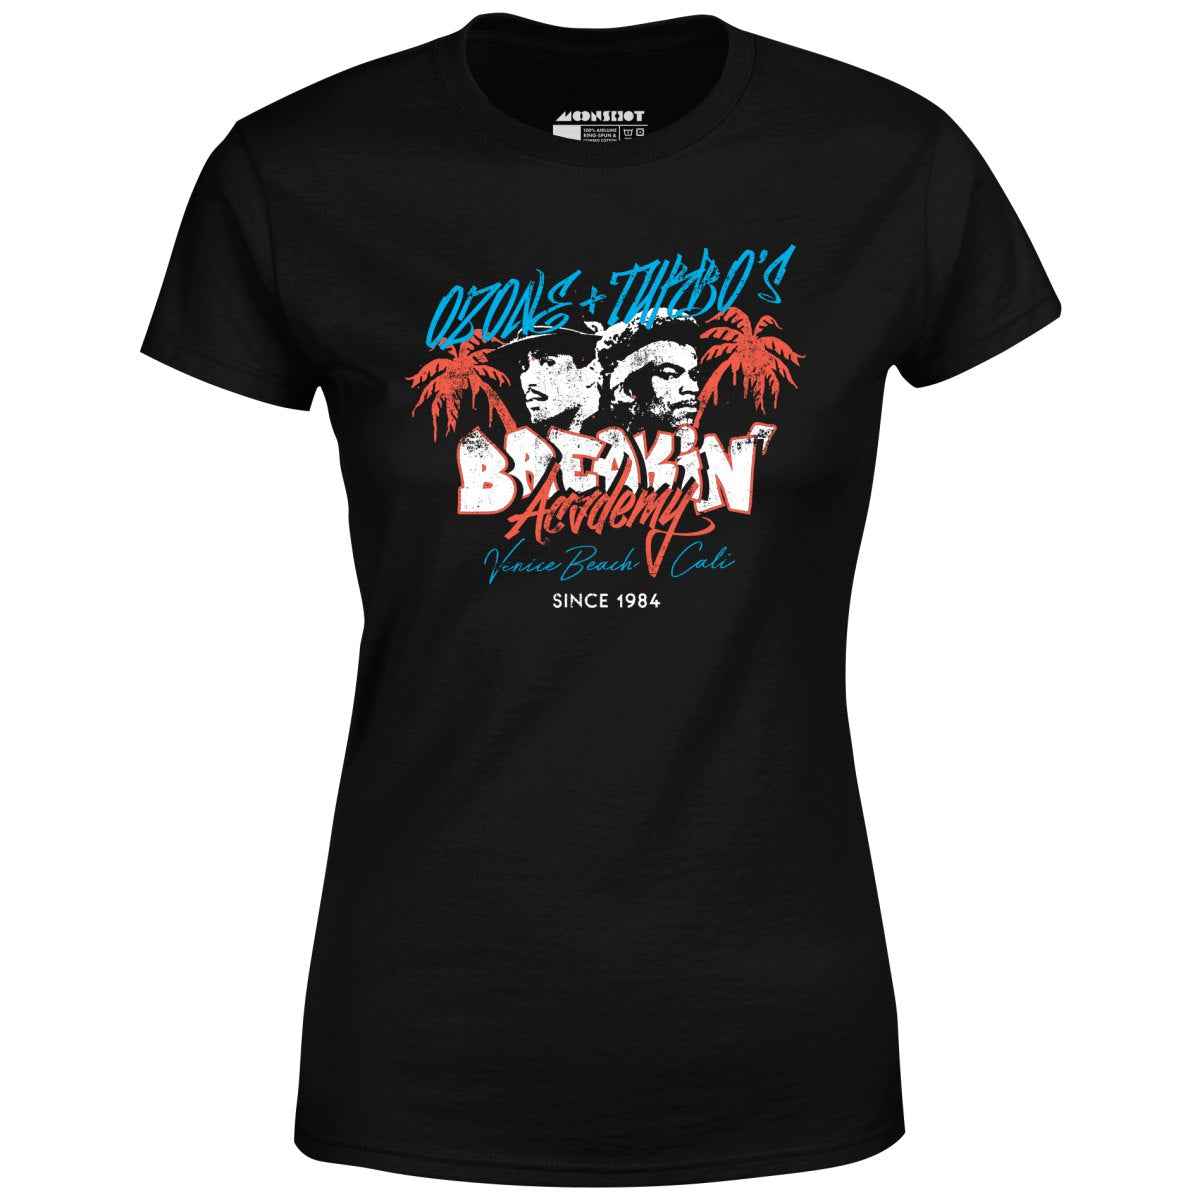 Ozone & Turbo's Breakin' Academy - Women's T-Shirt